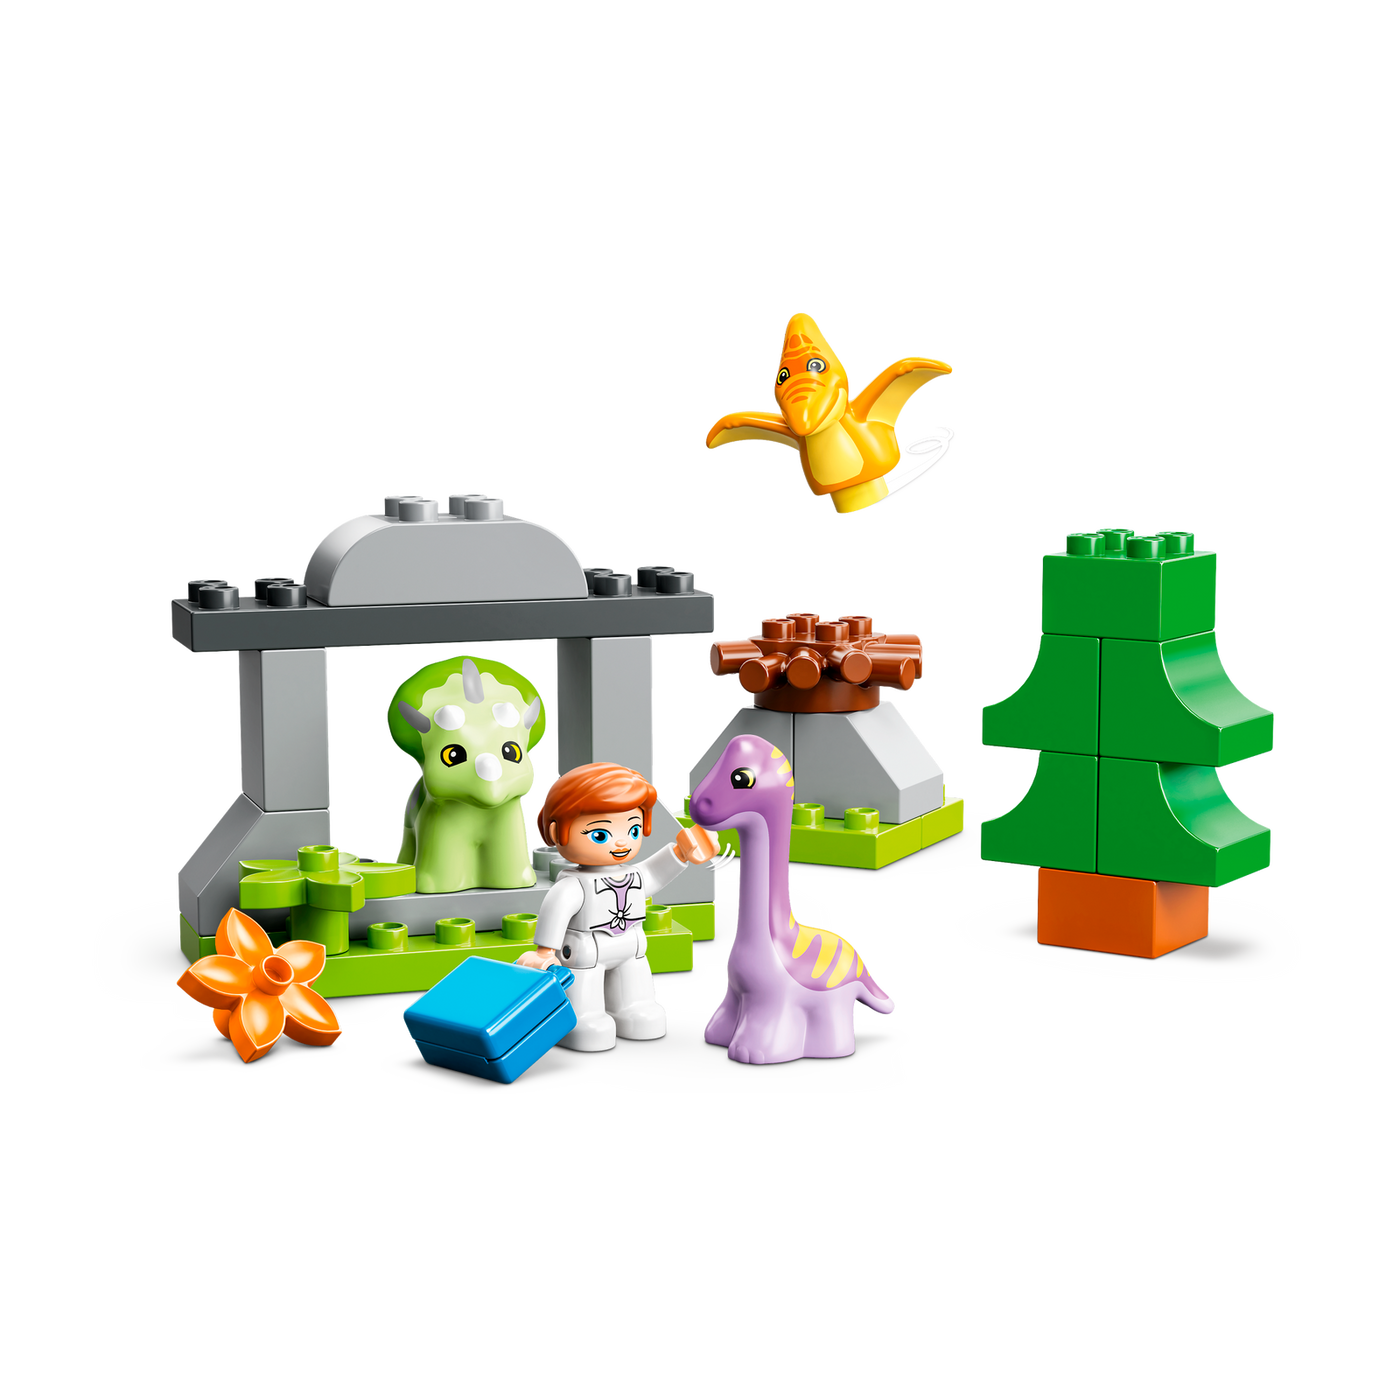 LEGO Duplo, Dinosaurbørnehave